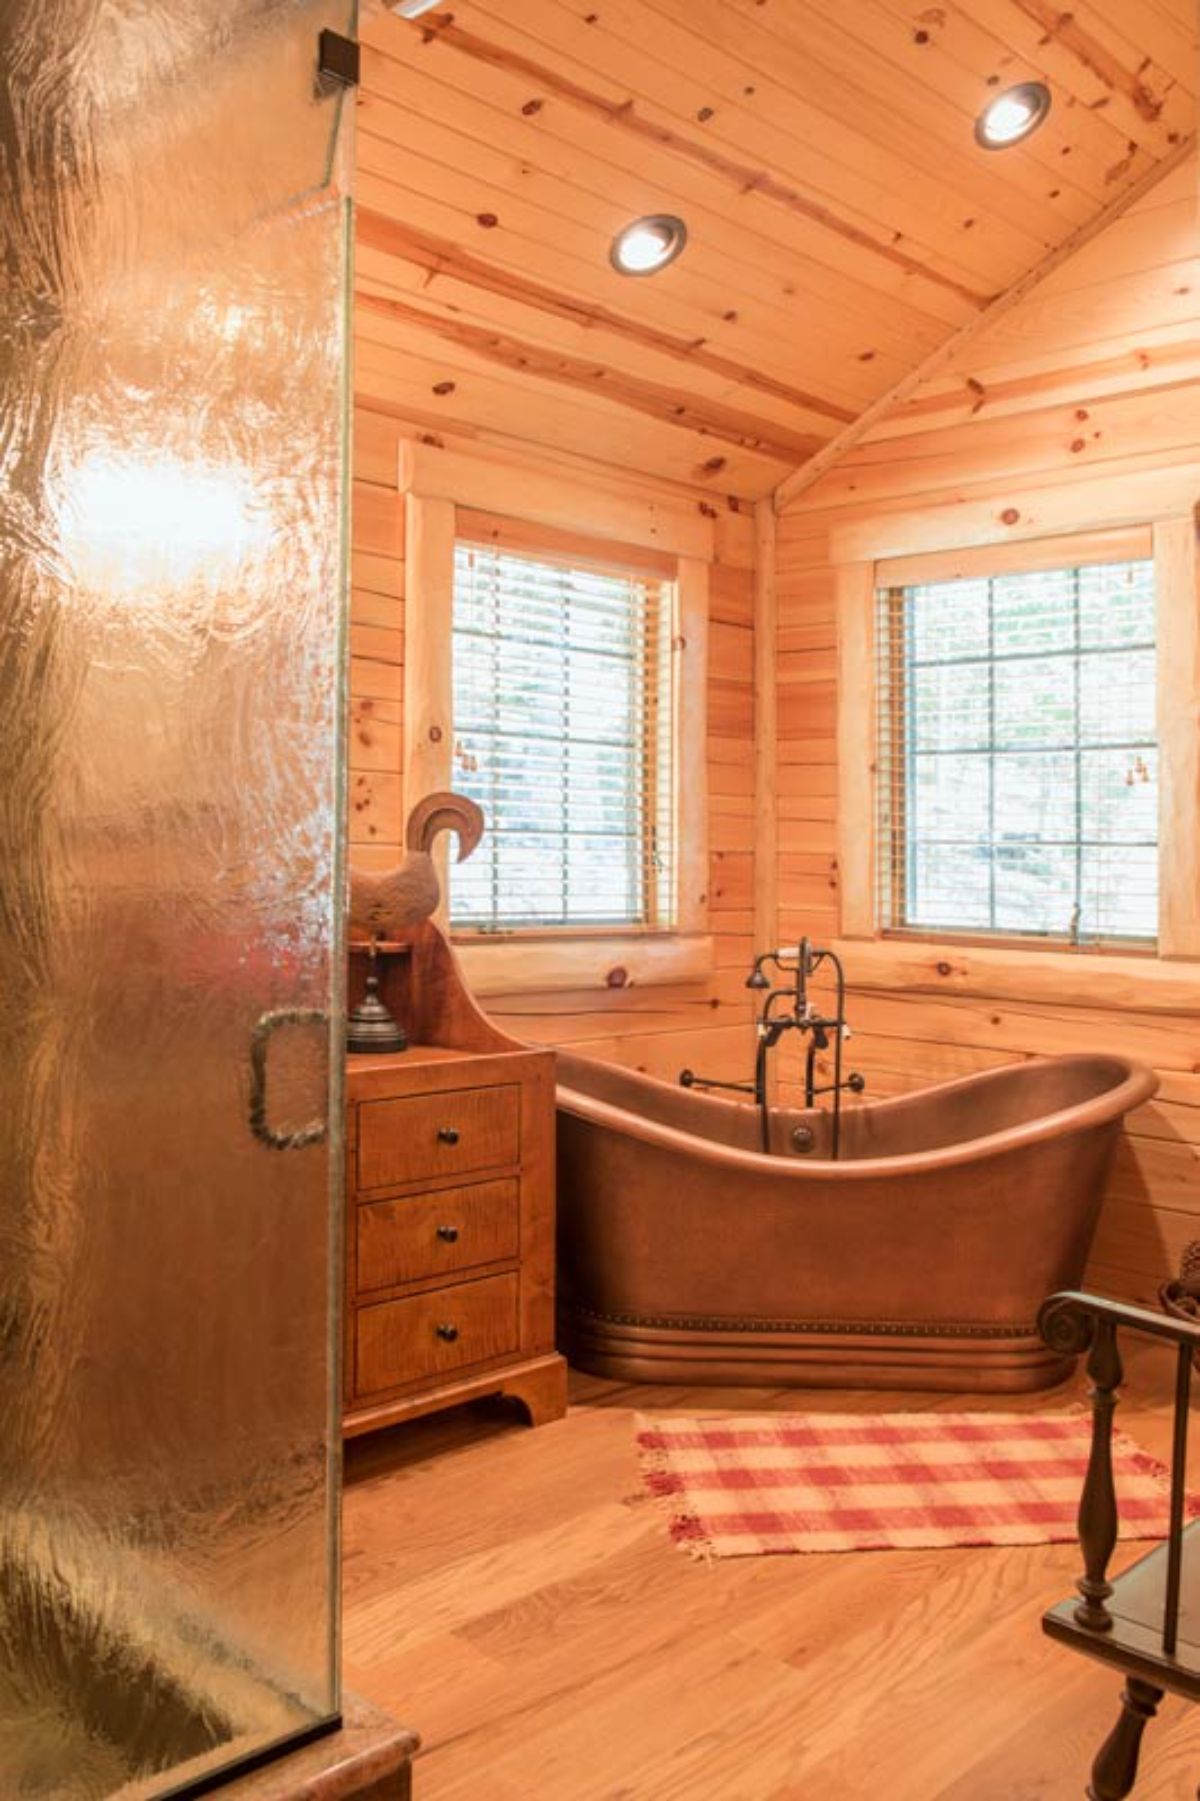 copper soaking tub beneath windows in corner of bathroom with glass shower door in foreground